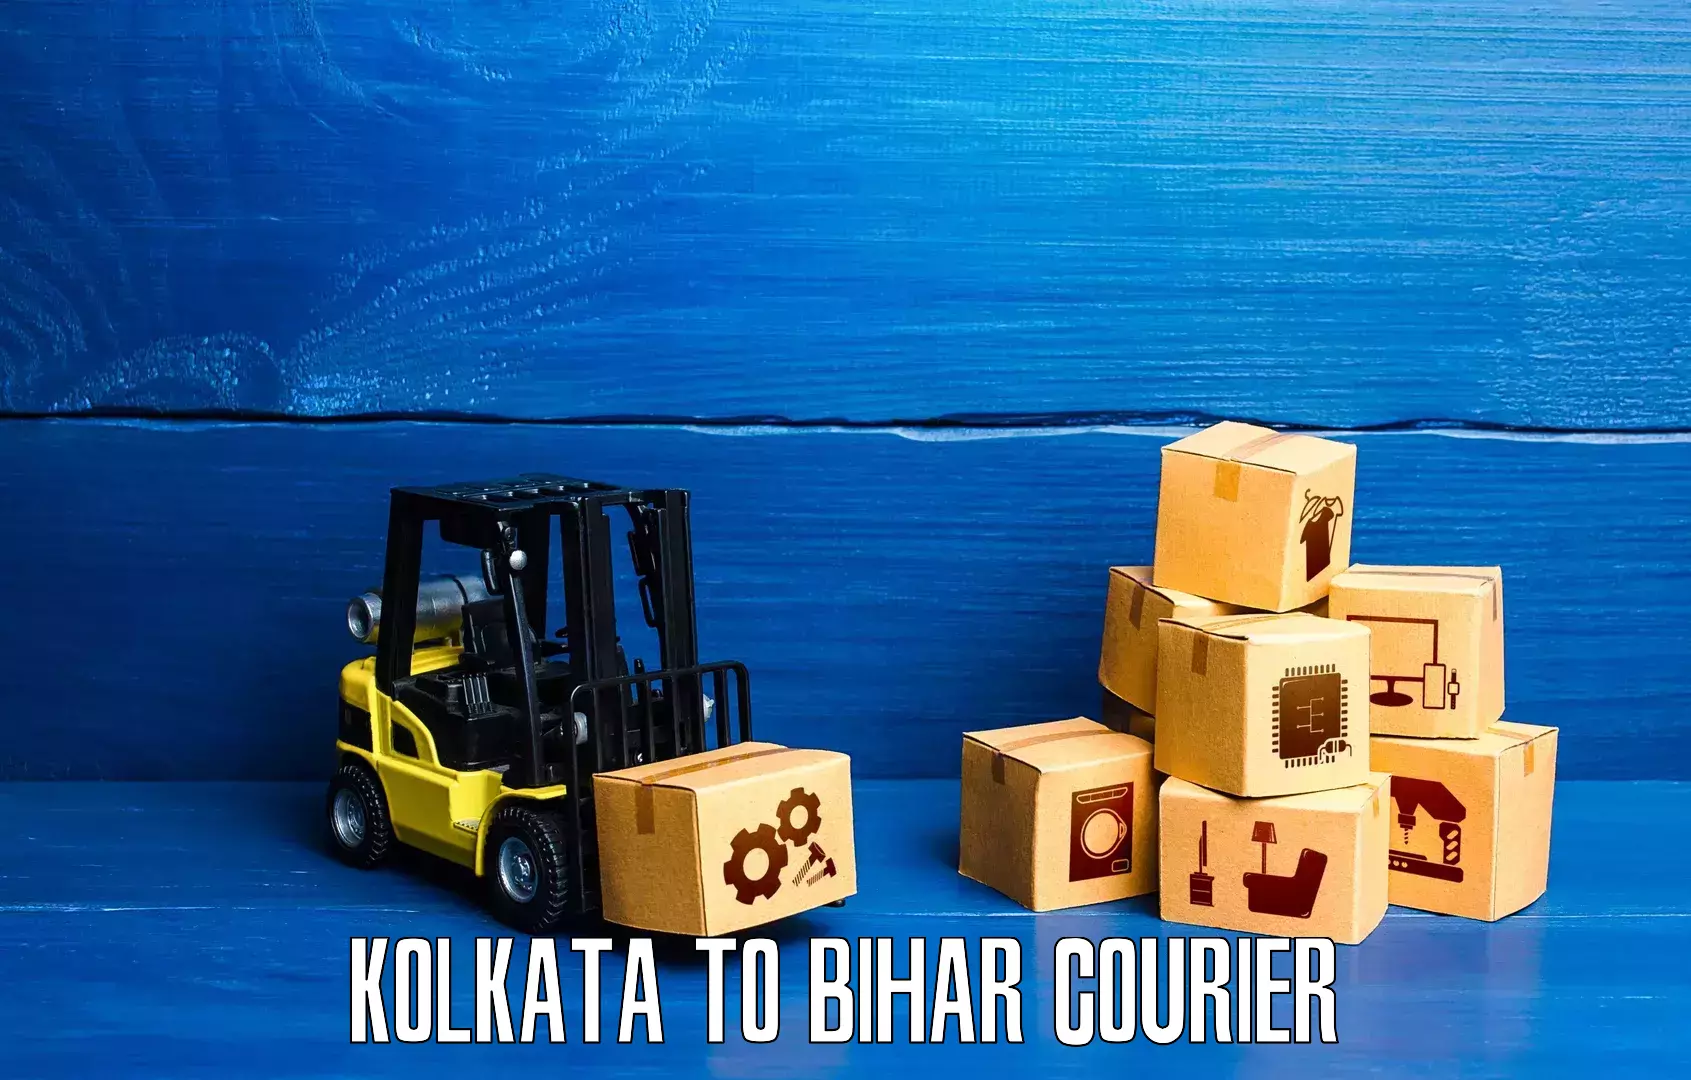 International courier networks Kolkata to Bihar